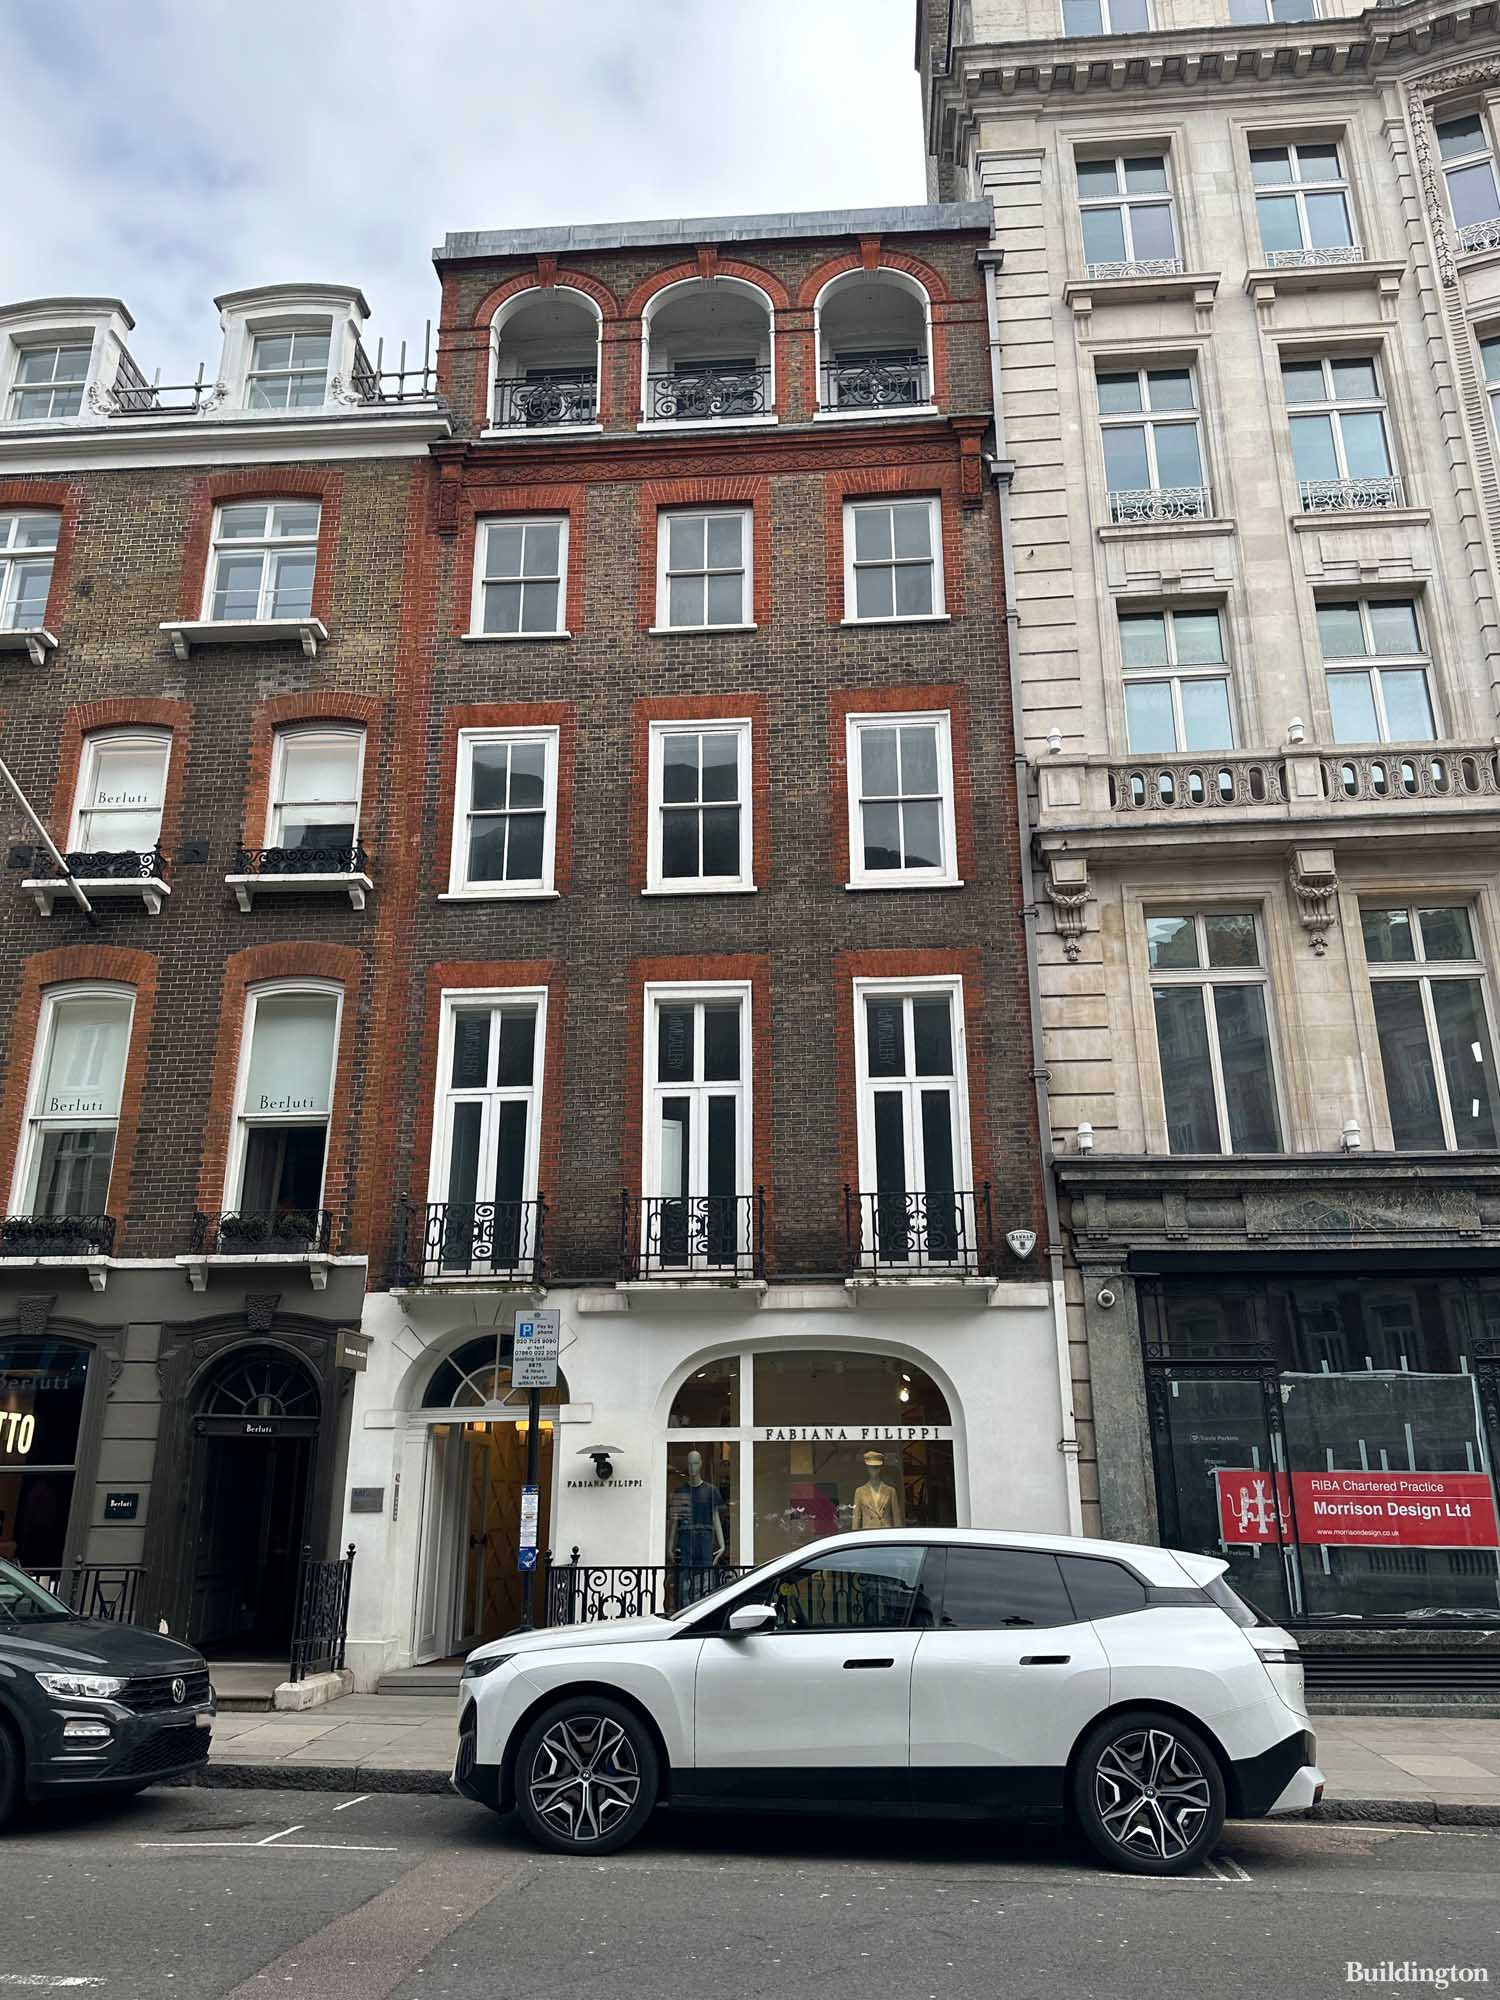 Exterior of 42 Conduit Street in Mayfair, London W1.